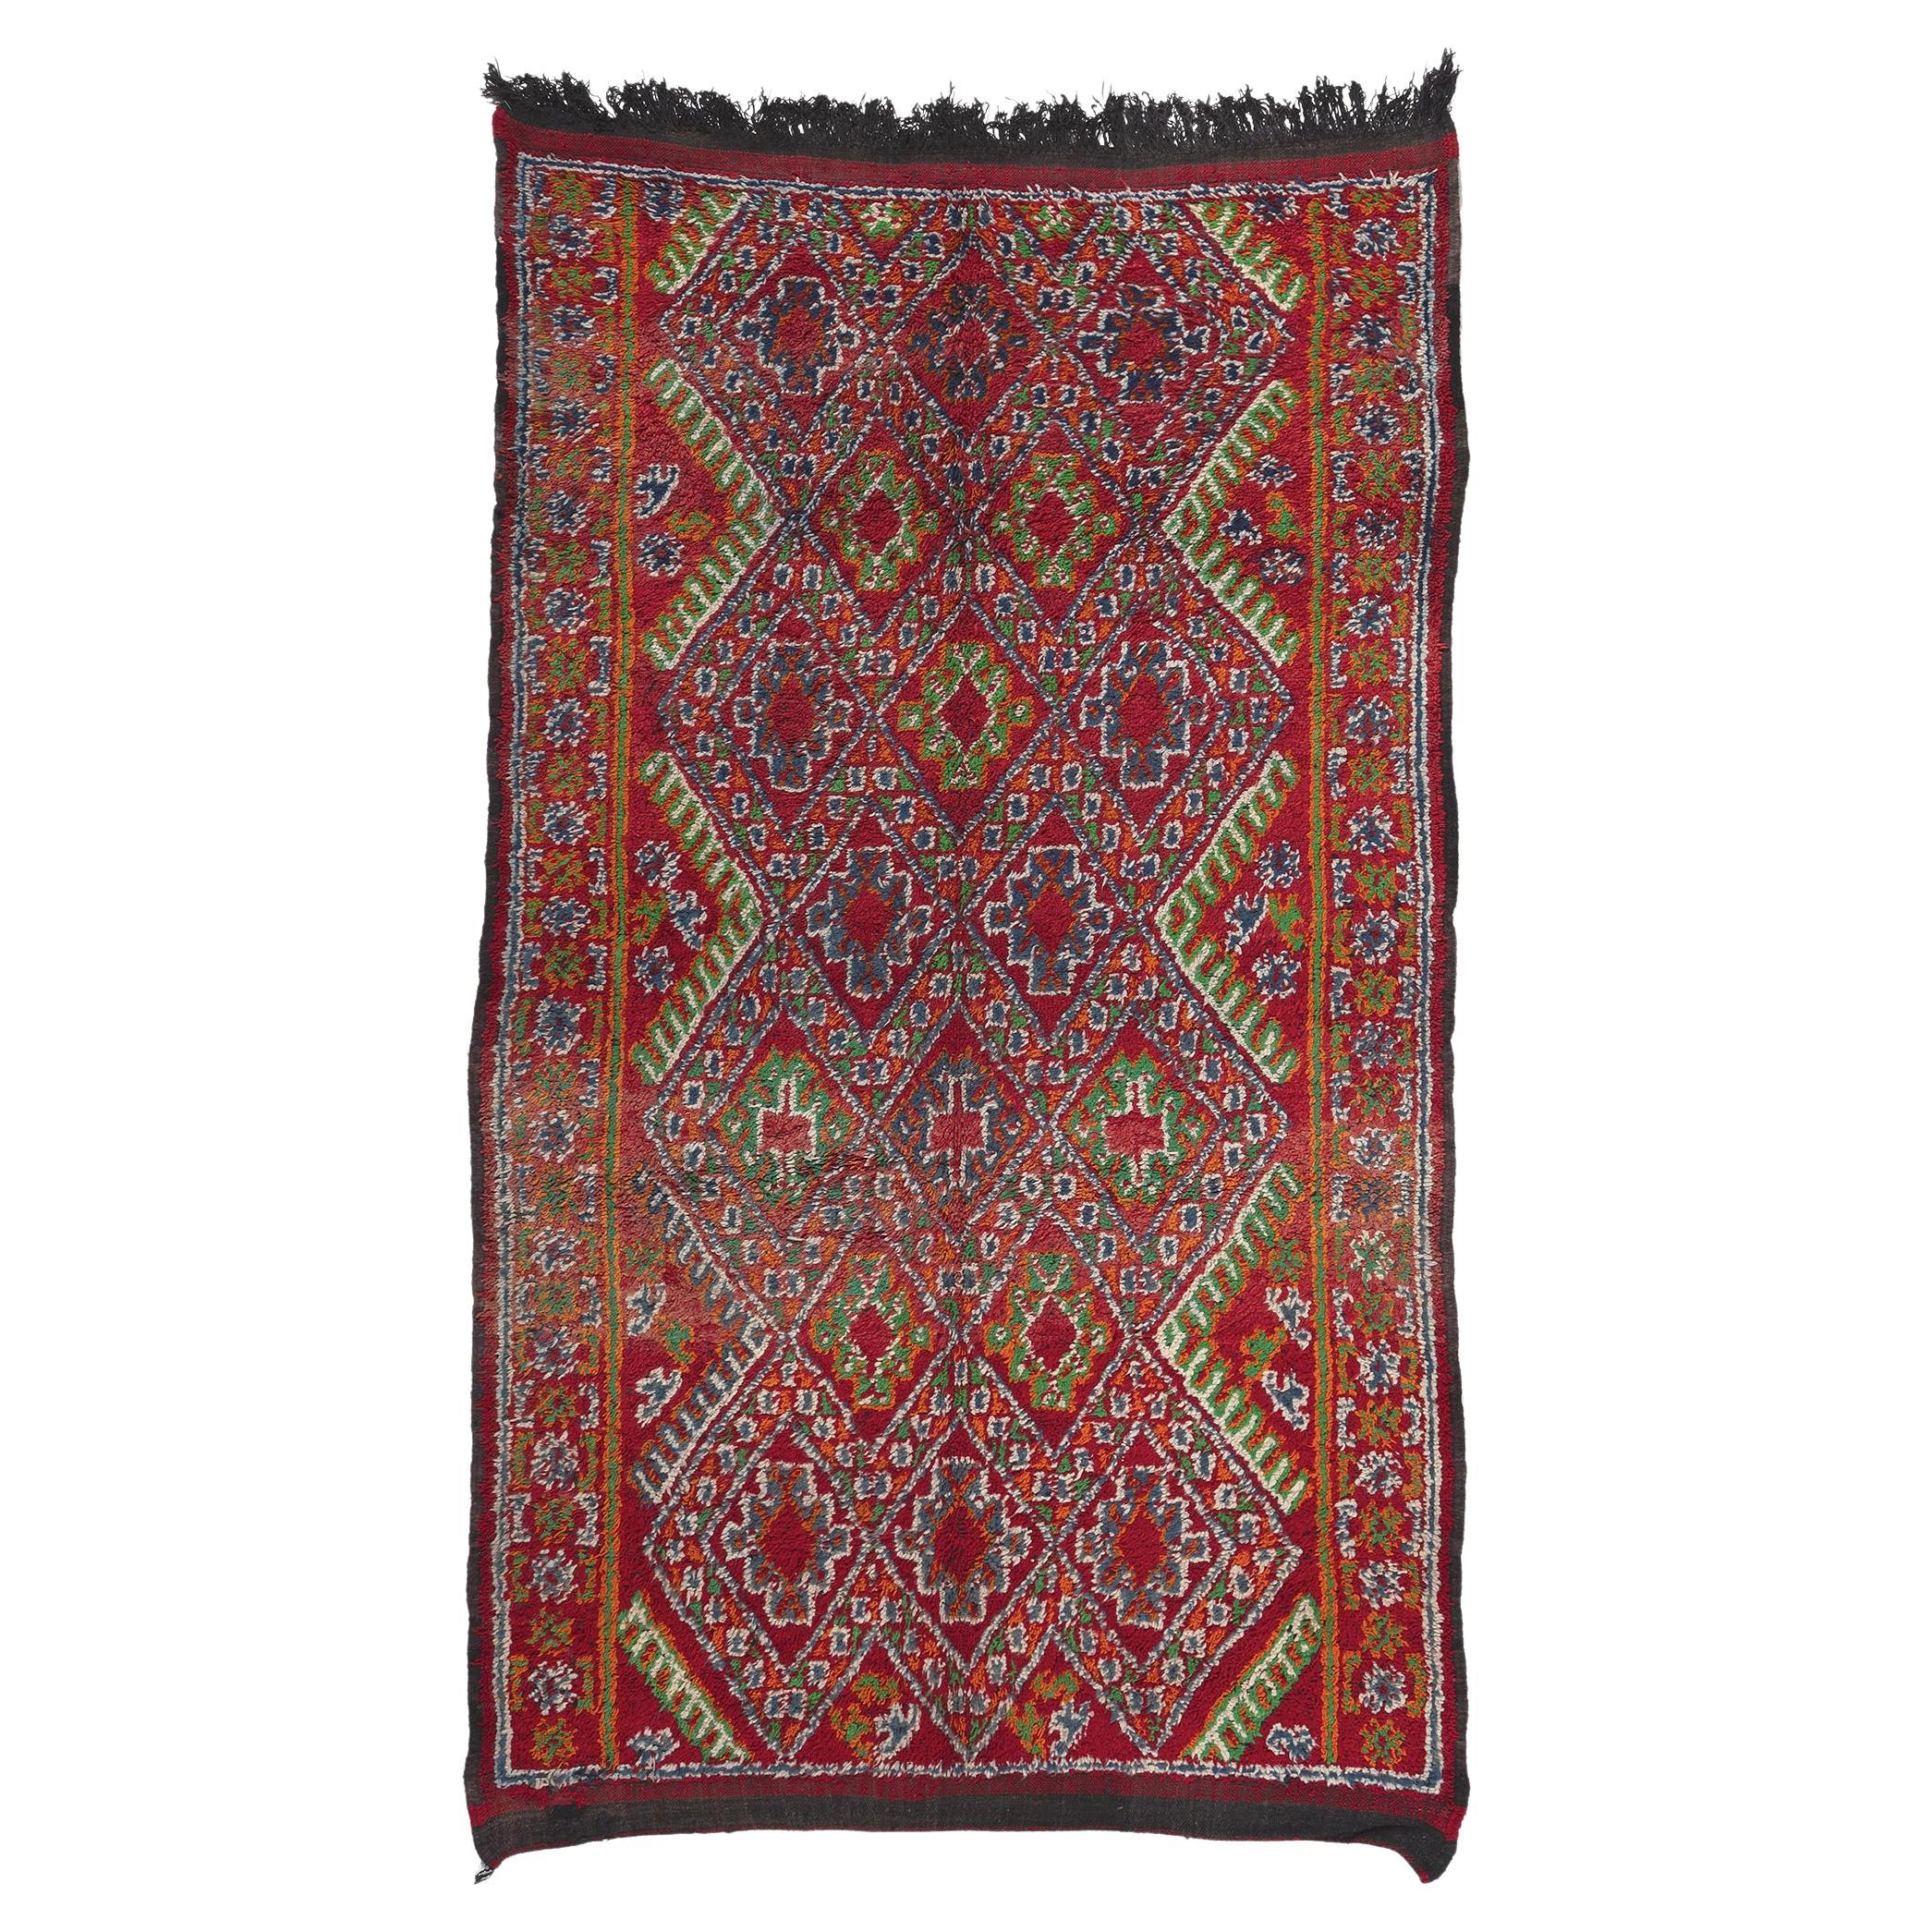 Vintage Red Beni MGuild Moroccan Rug, Midcentury Modern Meets Tribal Enchantment For Sale